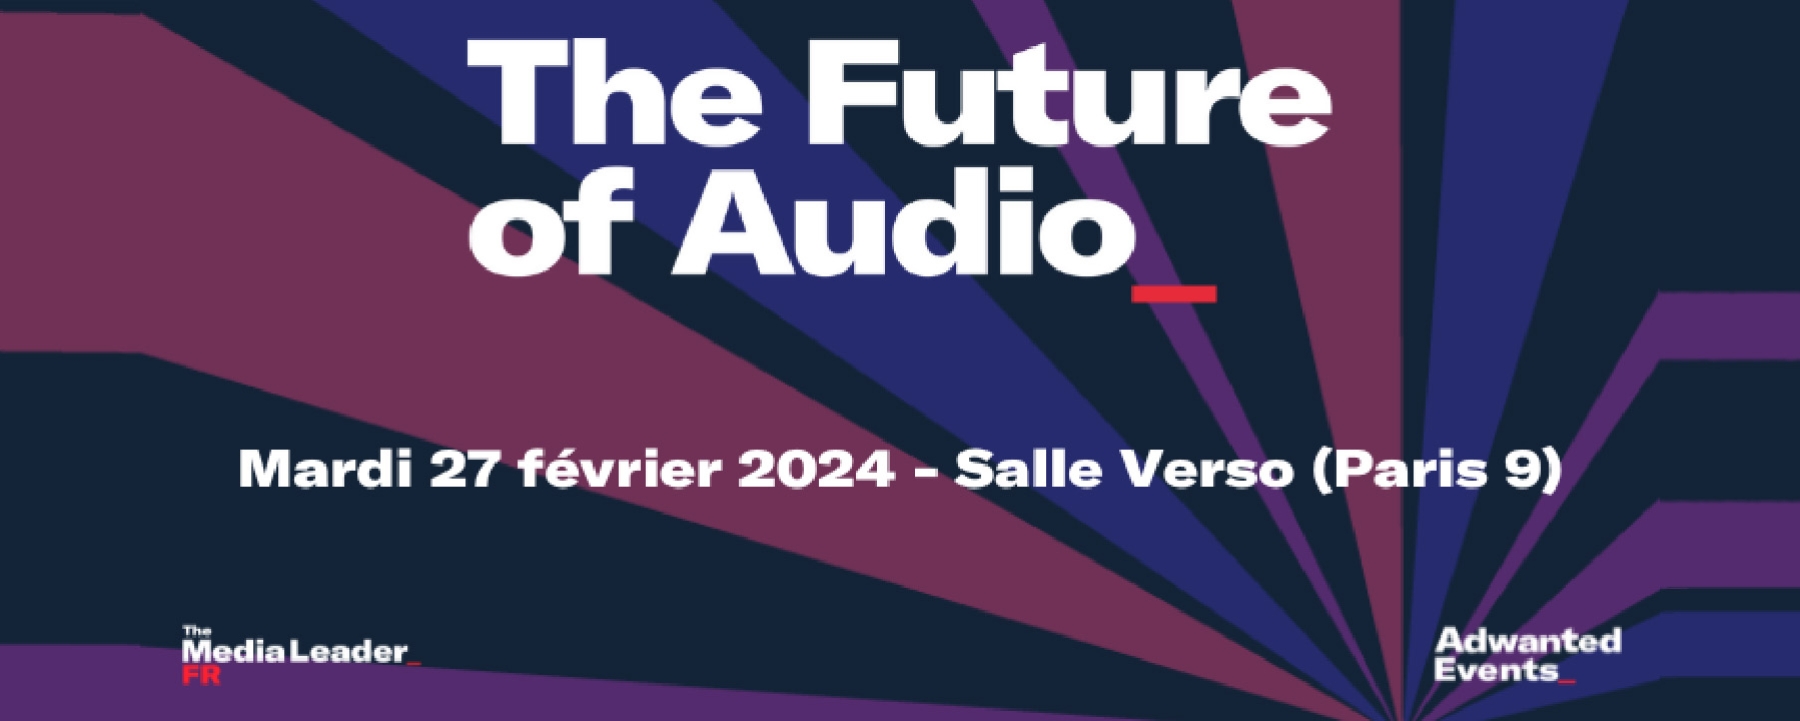 The Future of Audio